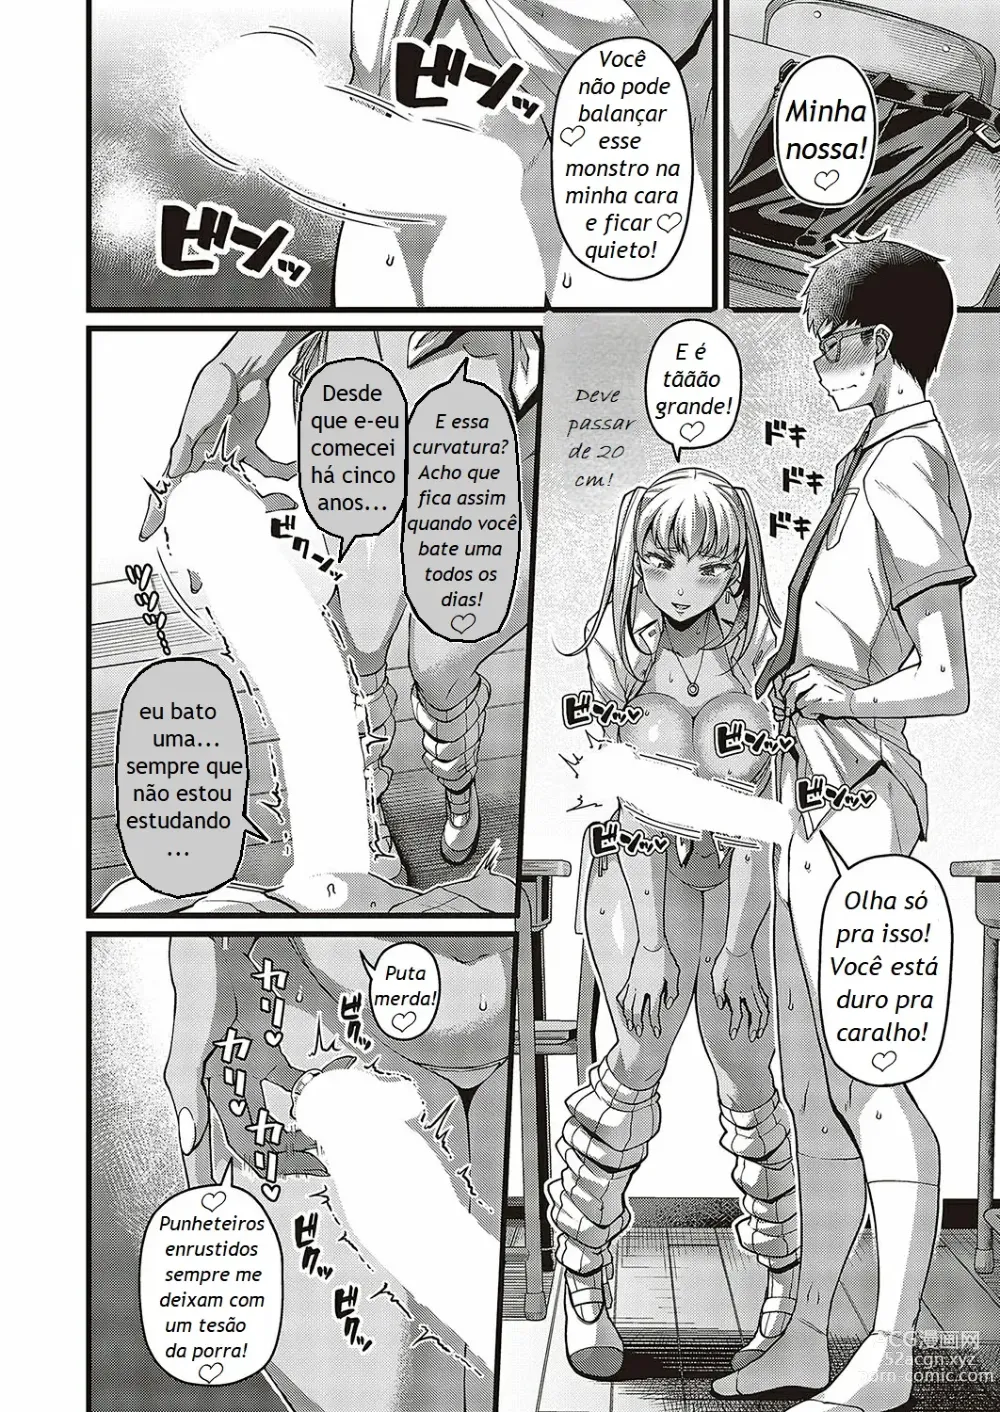 Page 6 of manga Way to Go!